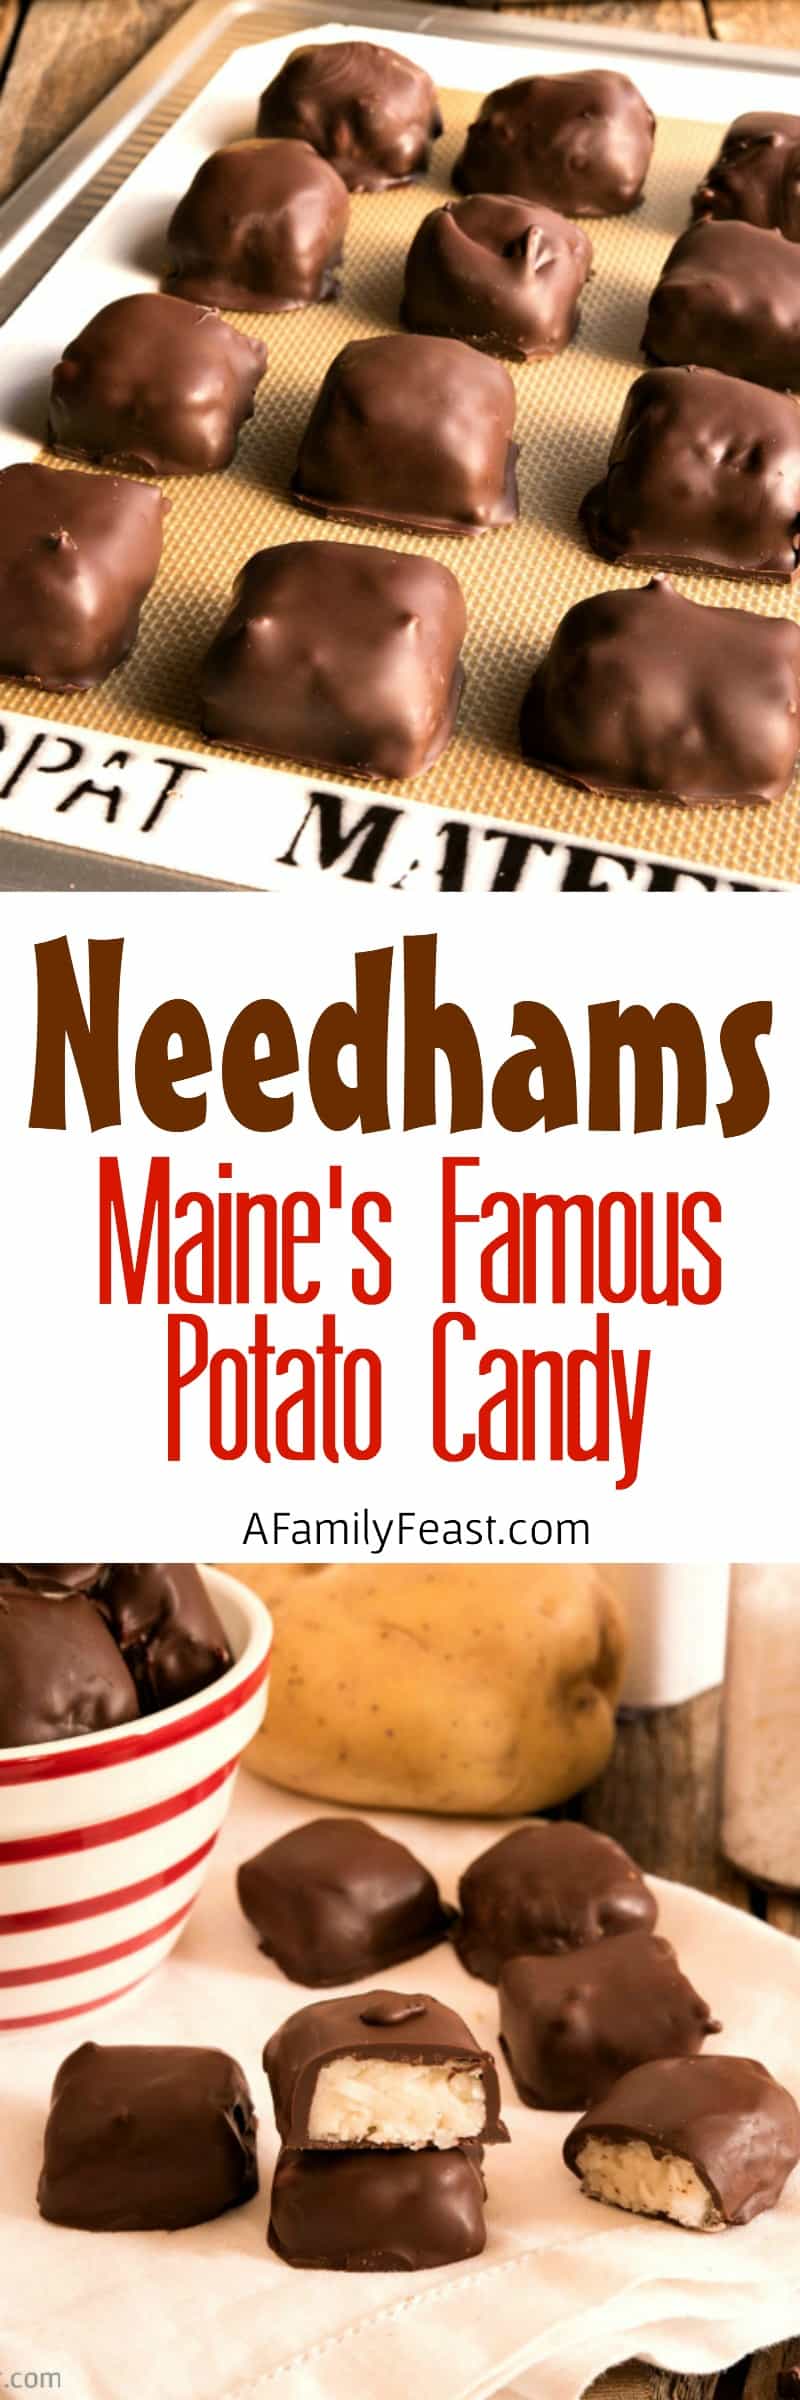 Needhams: Maine's Famous Potato Candy